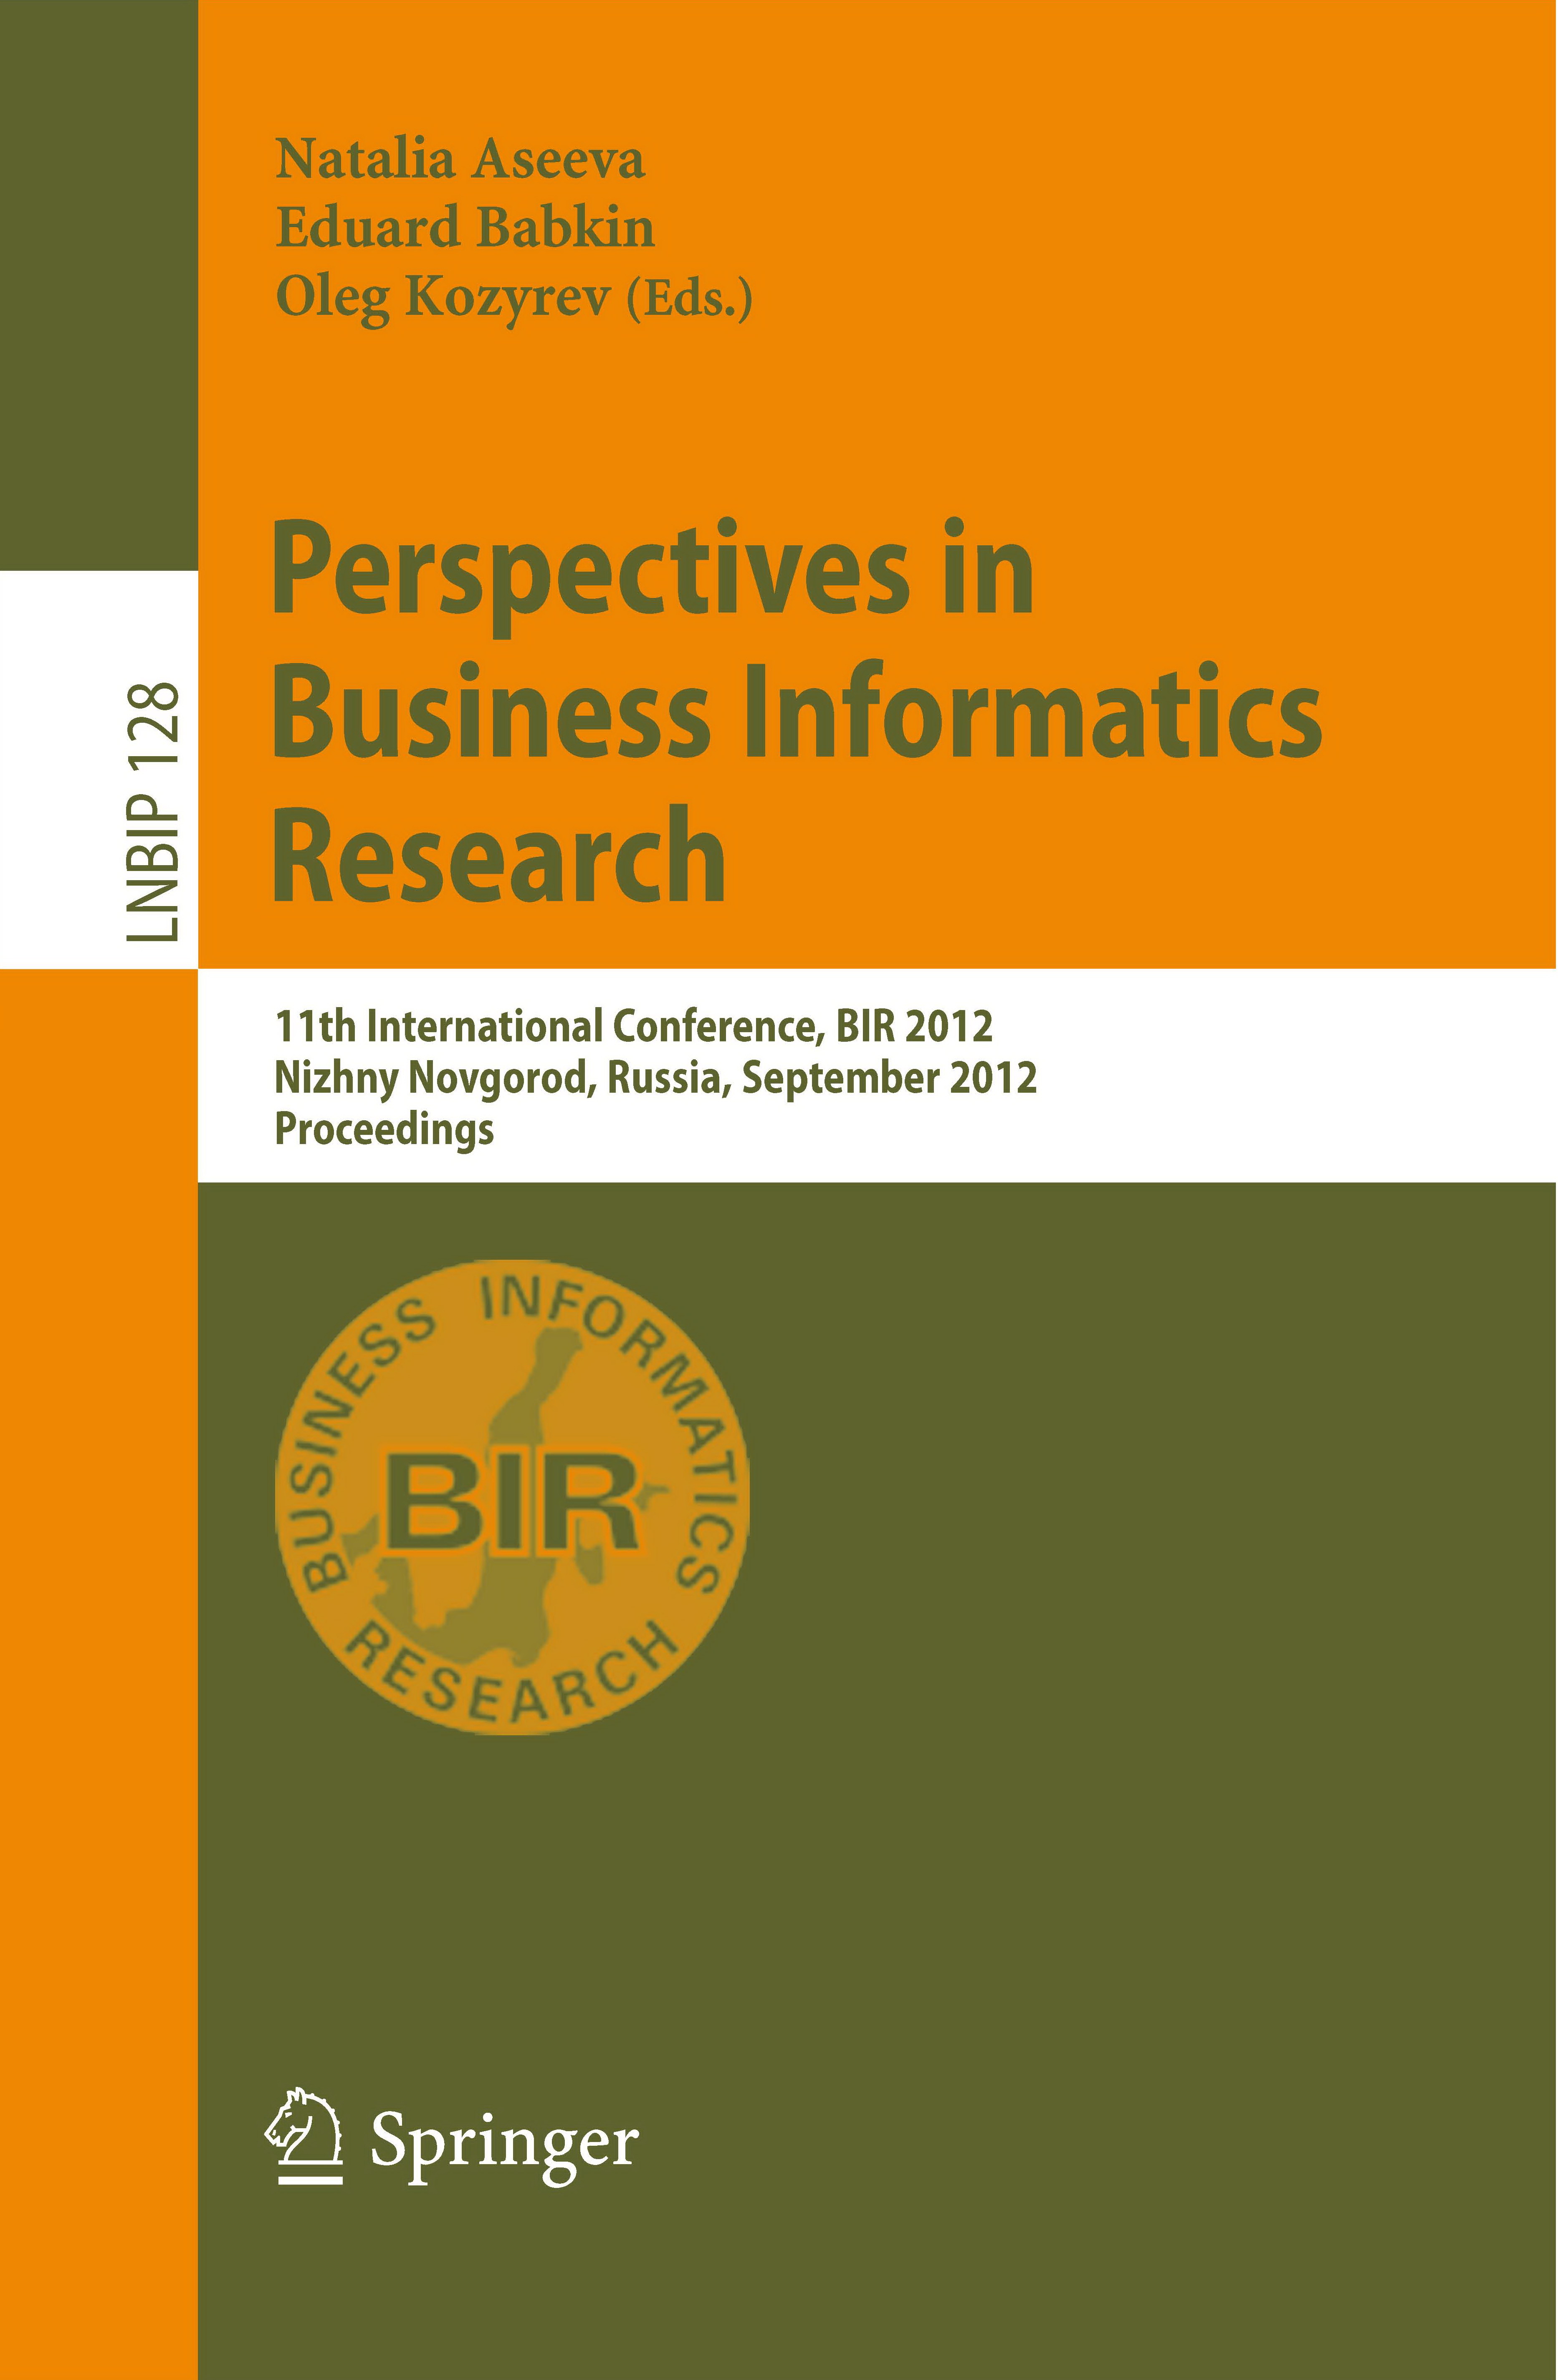 Perspectives in Business Informatics Research. 11th International Conference, BIR 2012, Nizhny Novgorod, Russia, September 2012 Proceedings